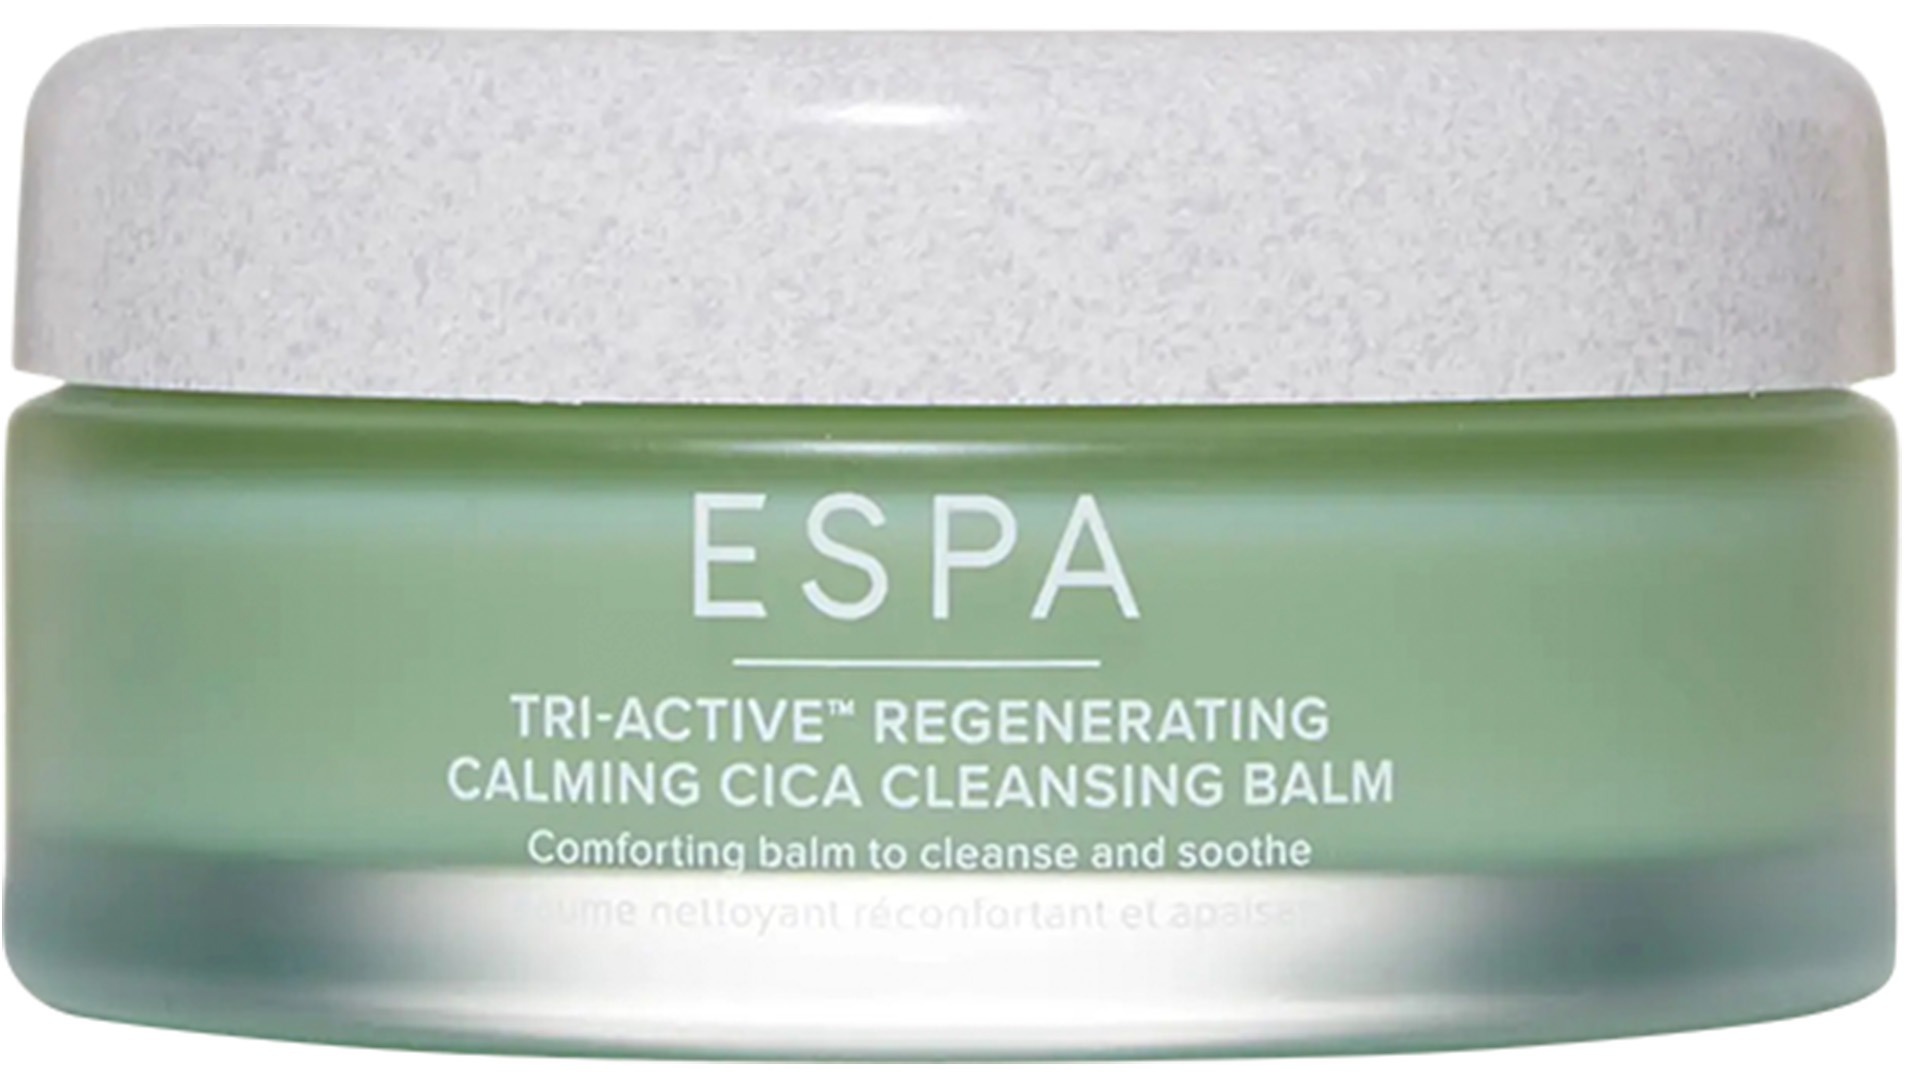 ESPA Tri-active™ Regenerating Calming Cica Cleansing Balm